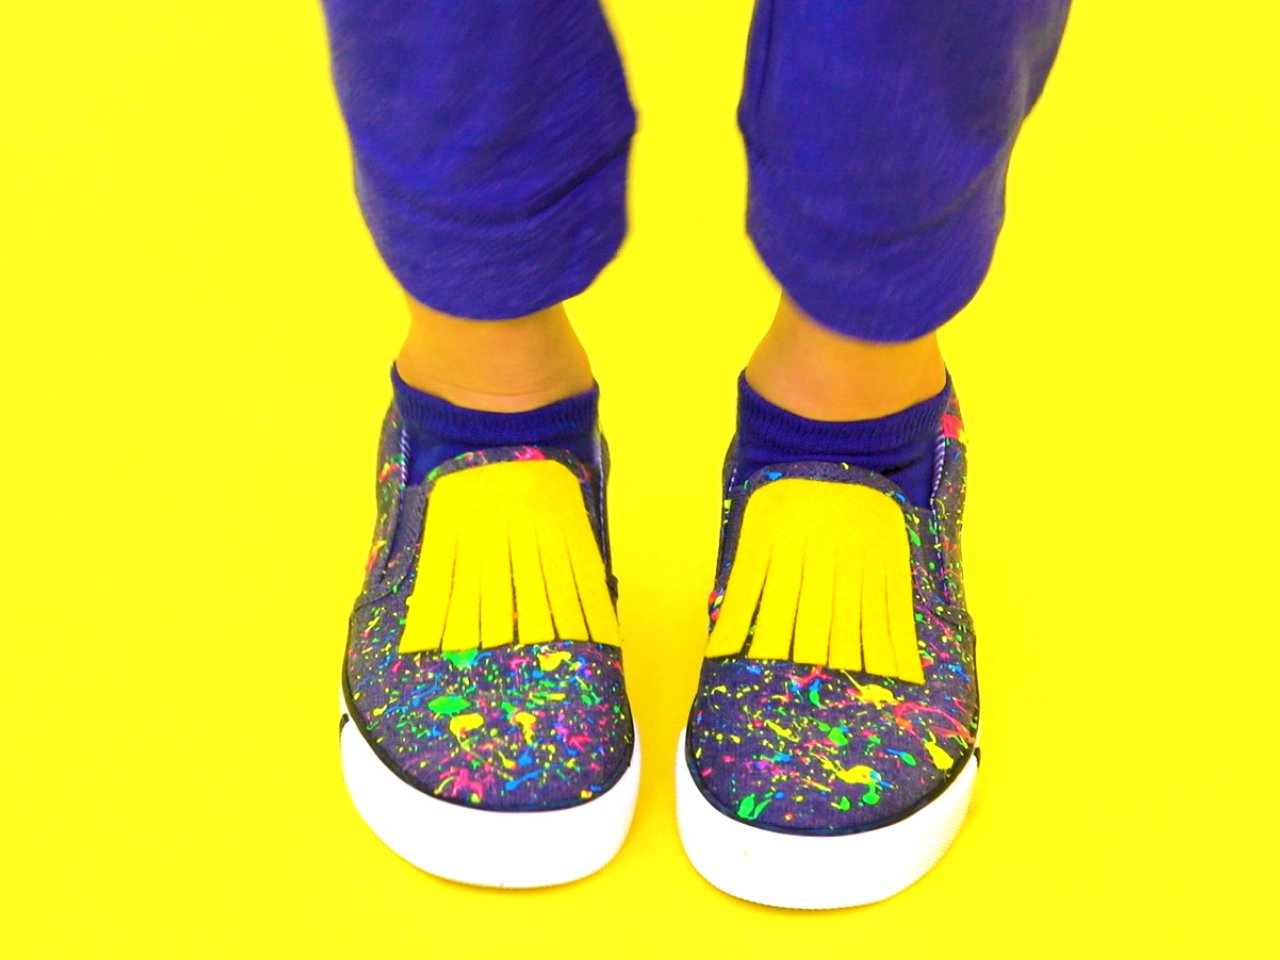 paint splatter shoes designer